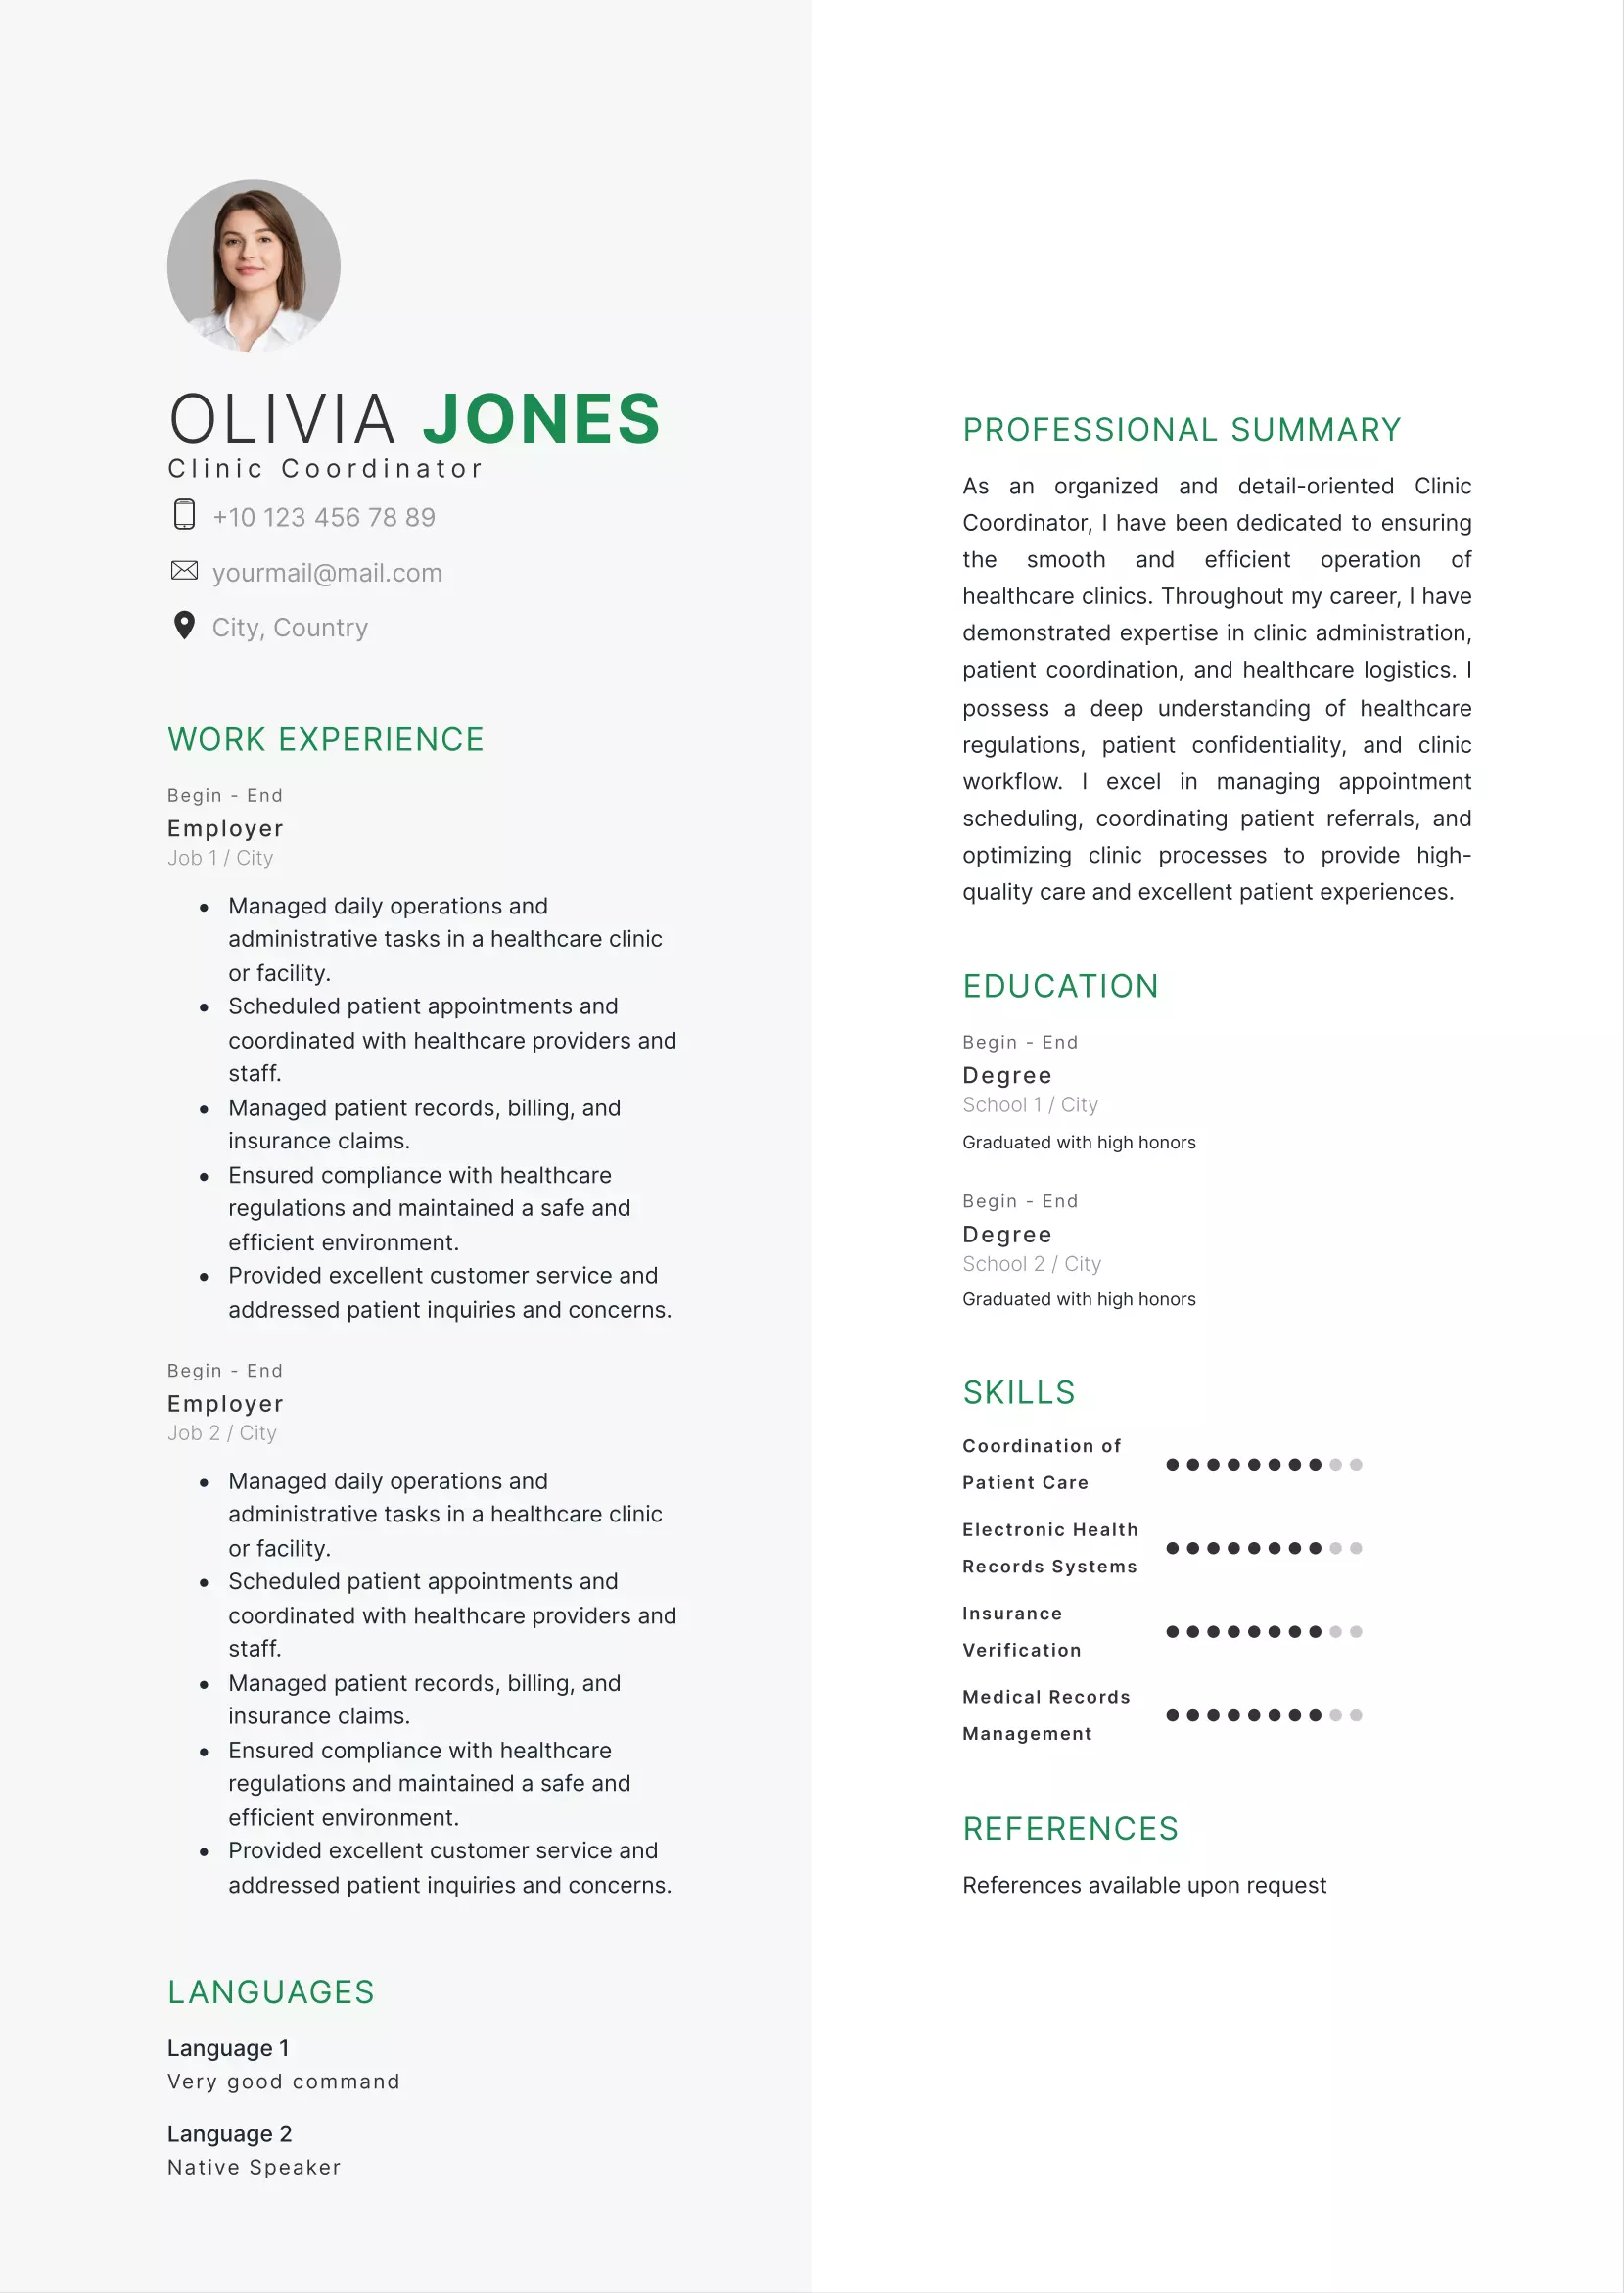 Clinic coordinator resume CV